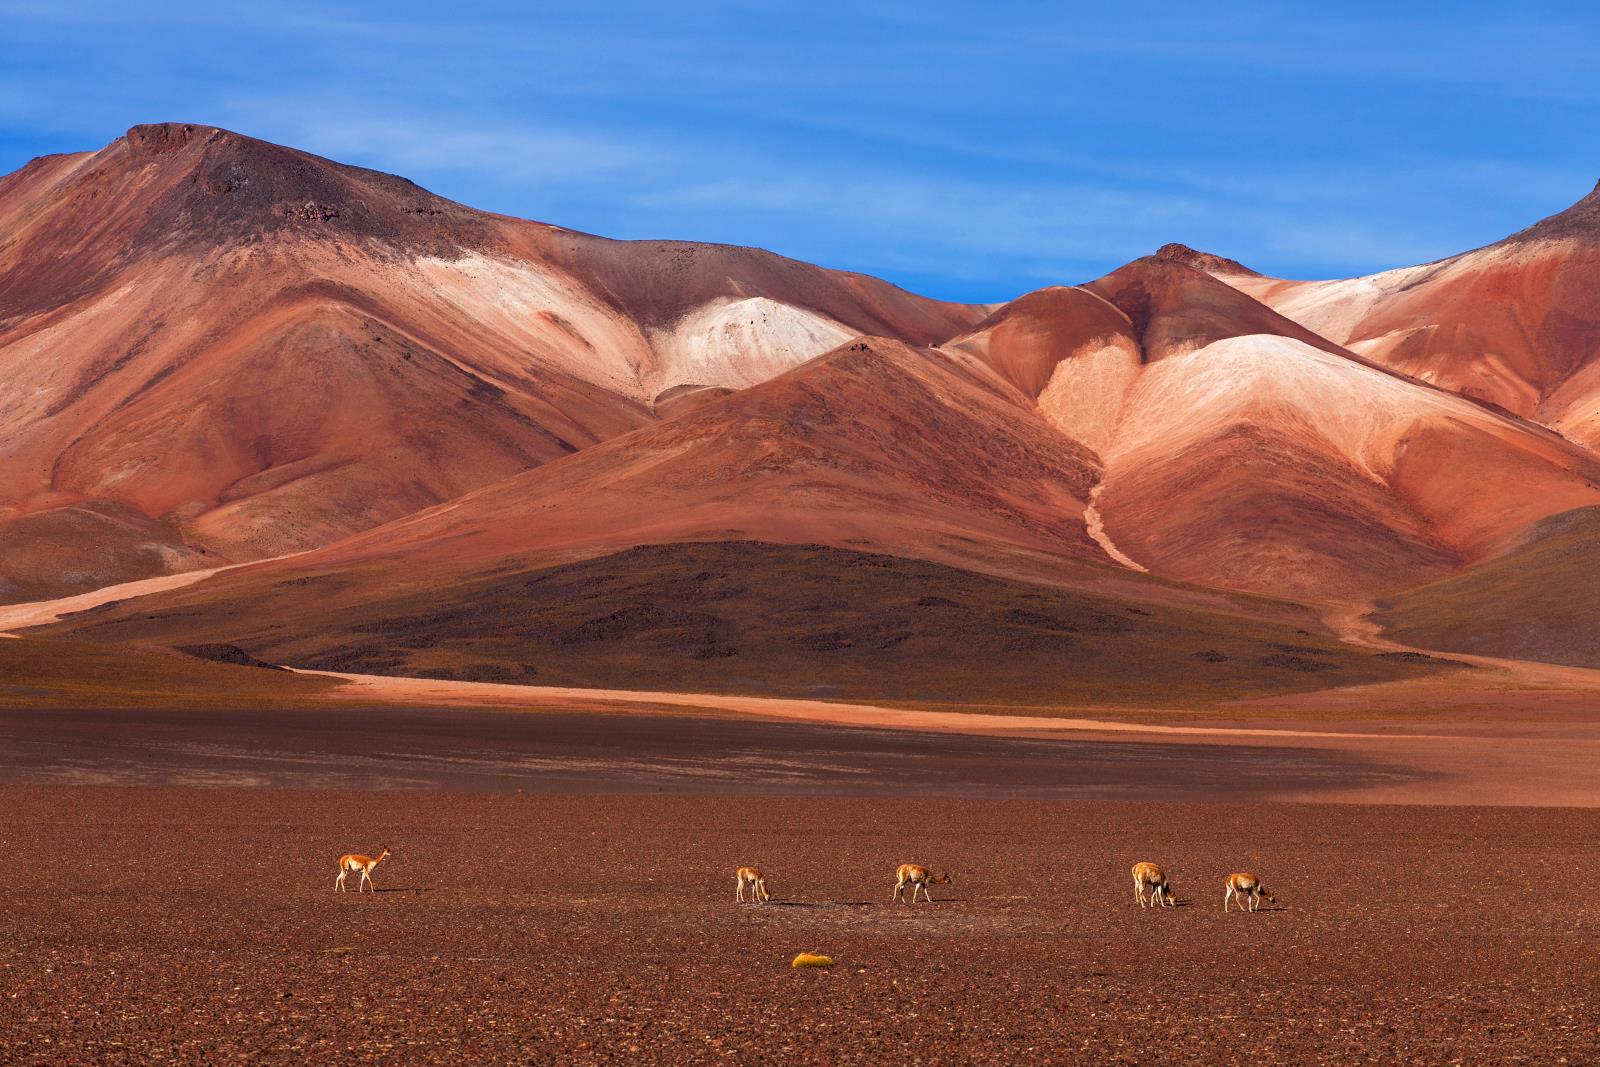 Desierto de Salvador Dali - High Adventure in the Bolivian Desert